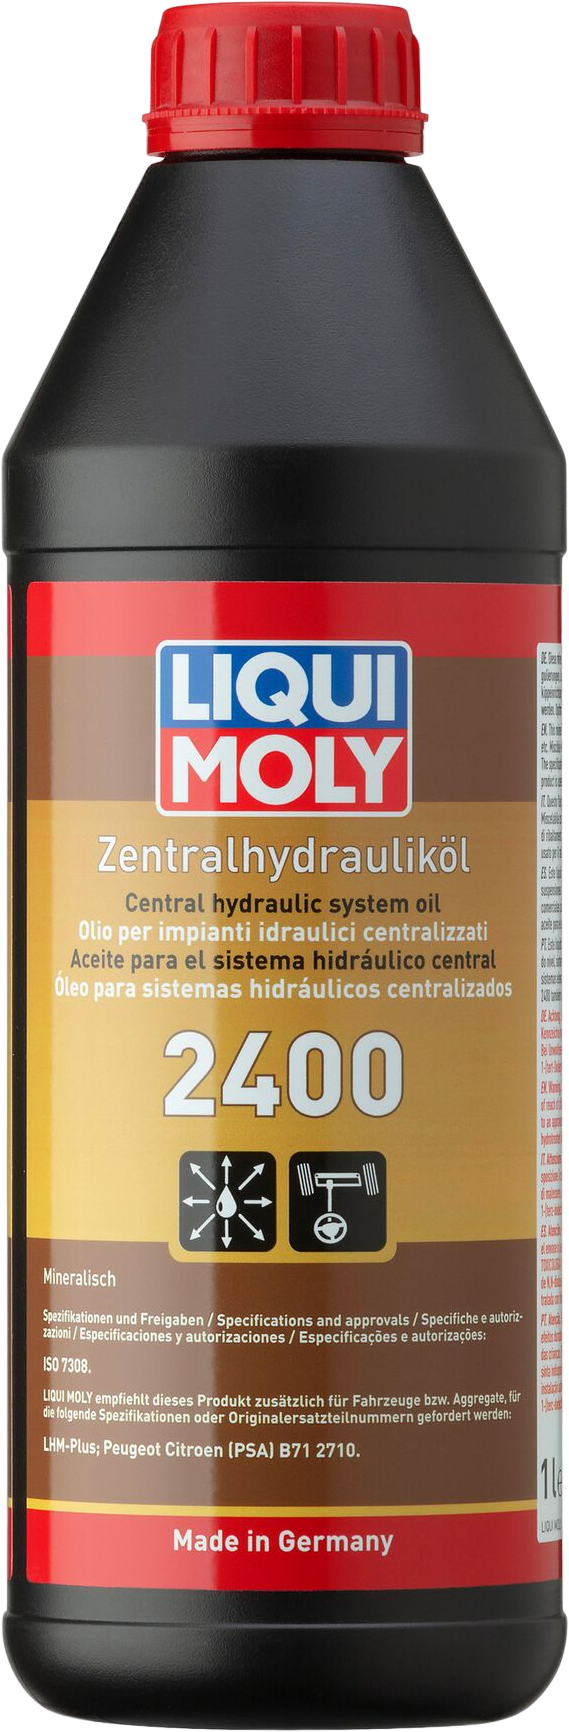 Liqui Moly Centrale hydrauliekolie 2400, 1 lt